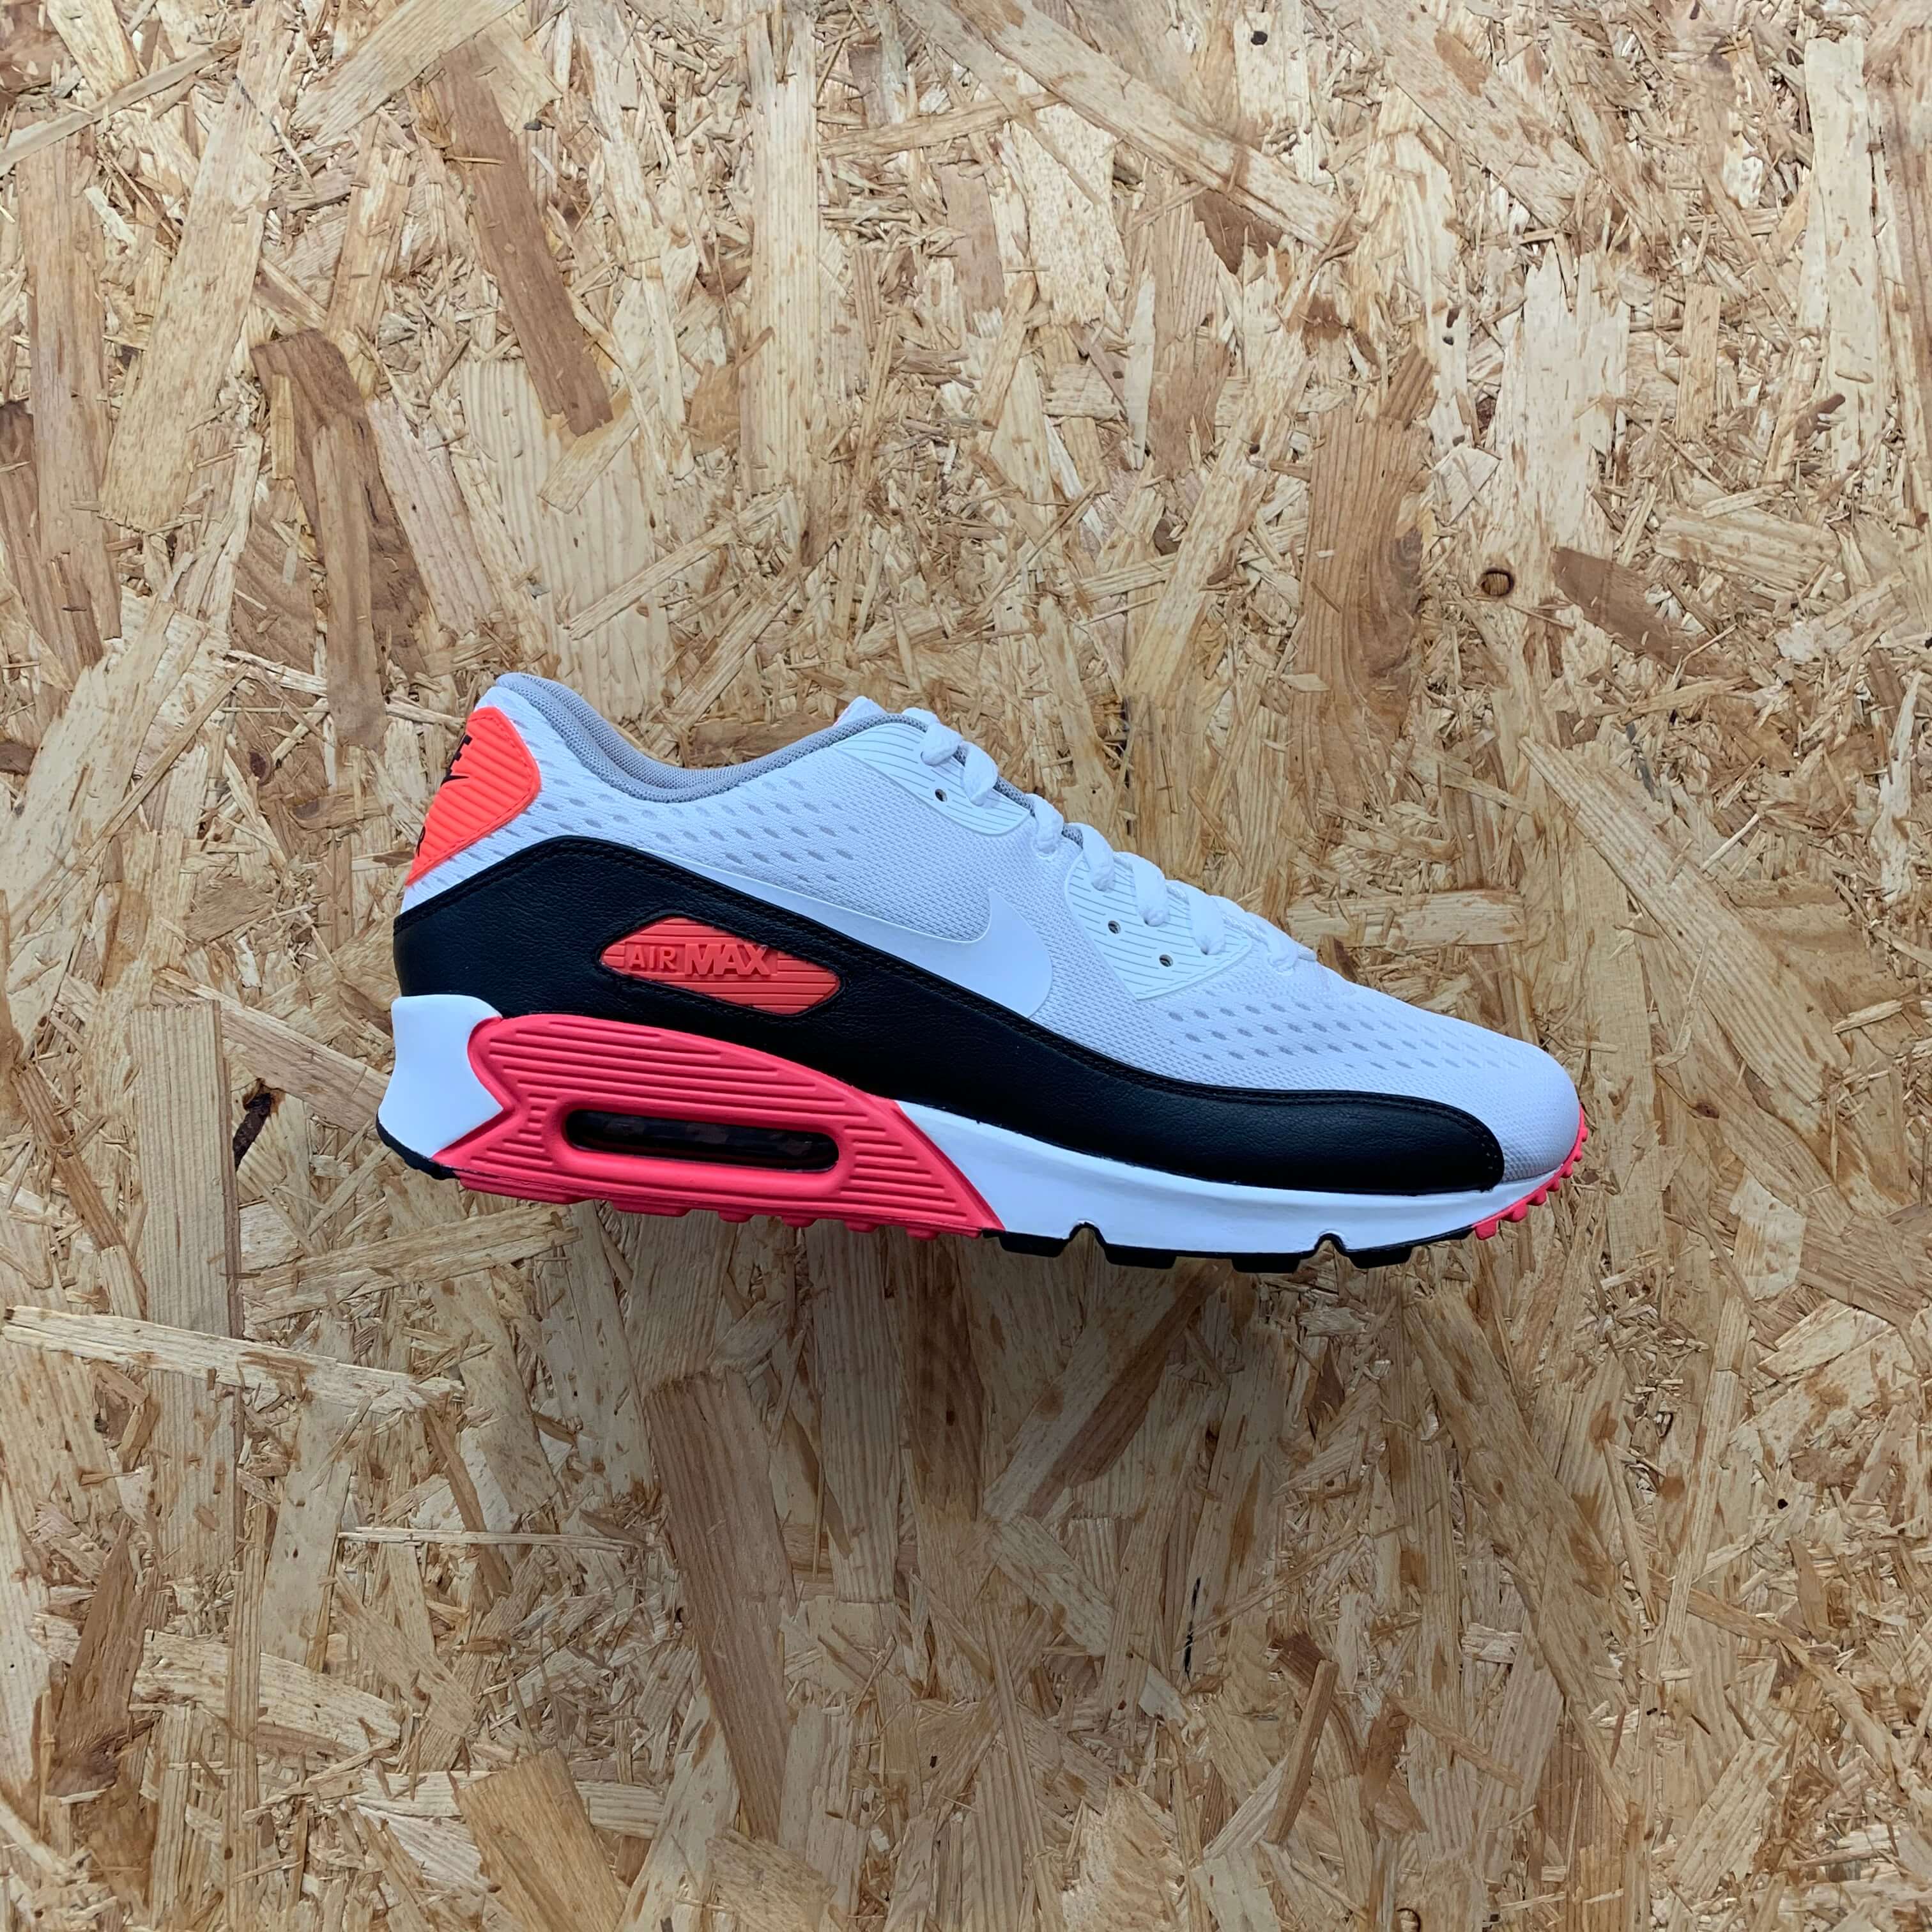 Nike Air Max 90 EM Infrared The Sneaker Store Brighton